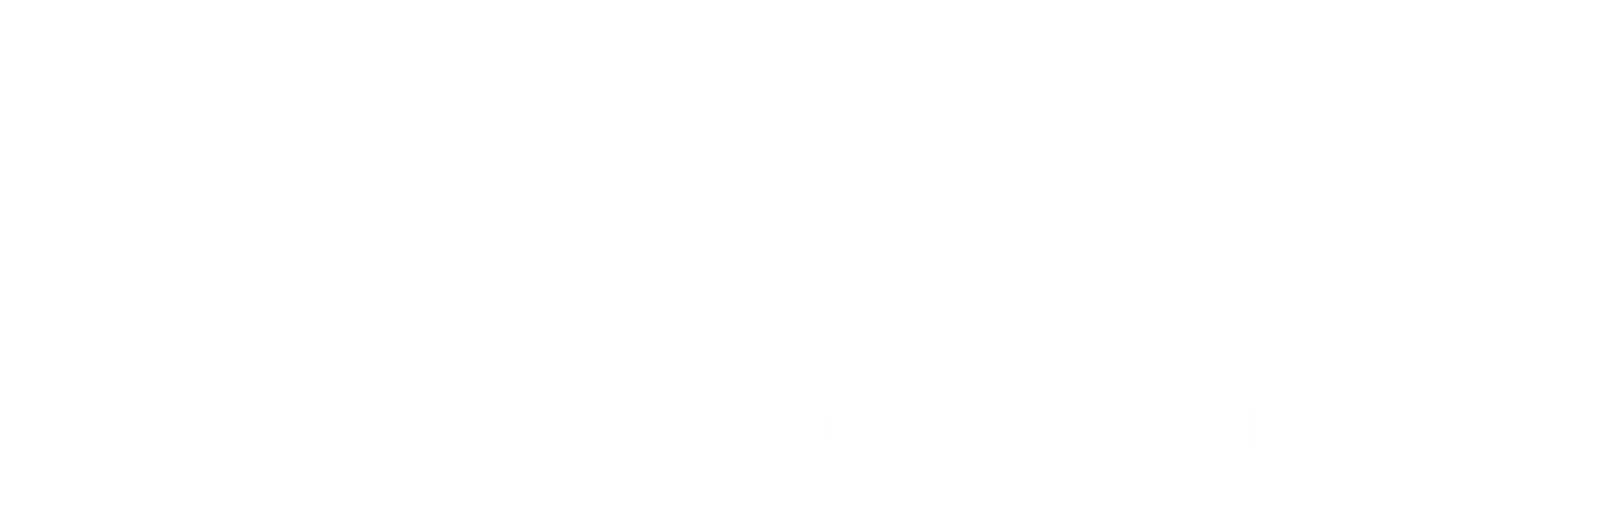 lafayre natural luxury logo in white